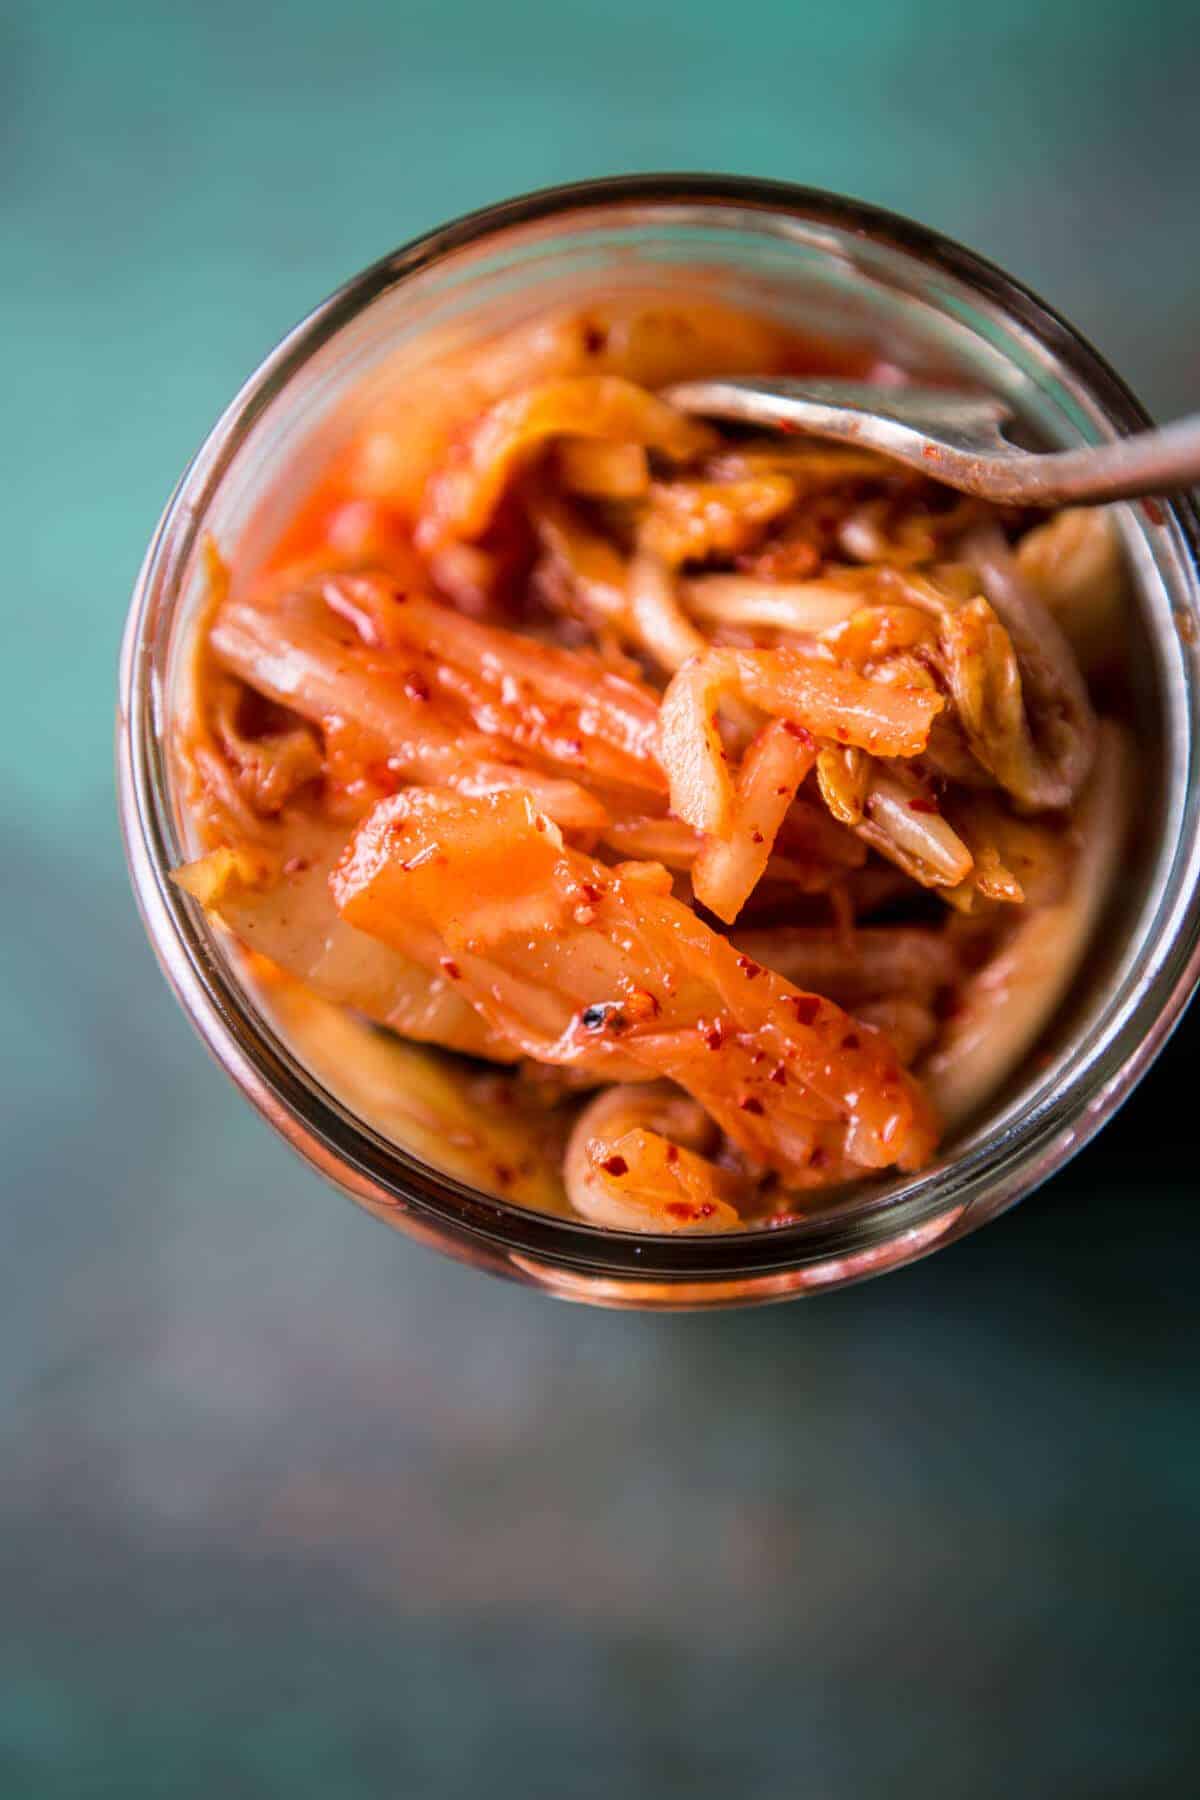 Kimchi Chicken and Bacon Fried Rice | halfbakedharvest.com @hbharvest